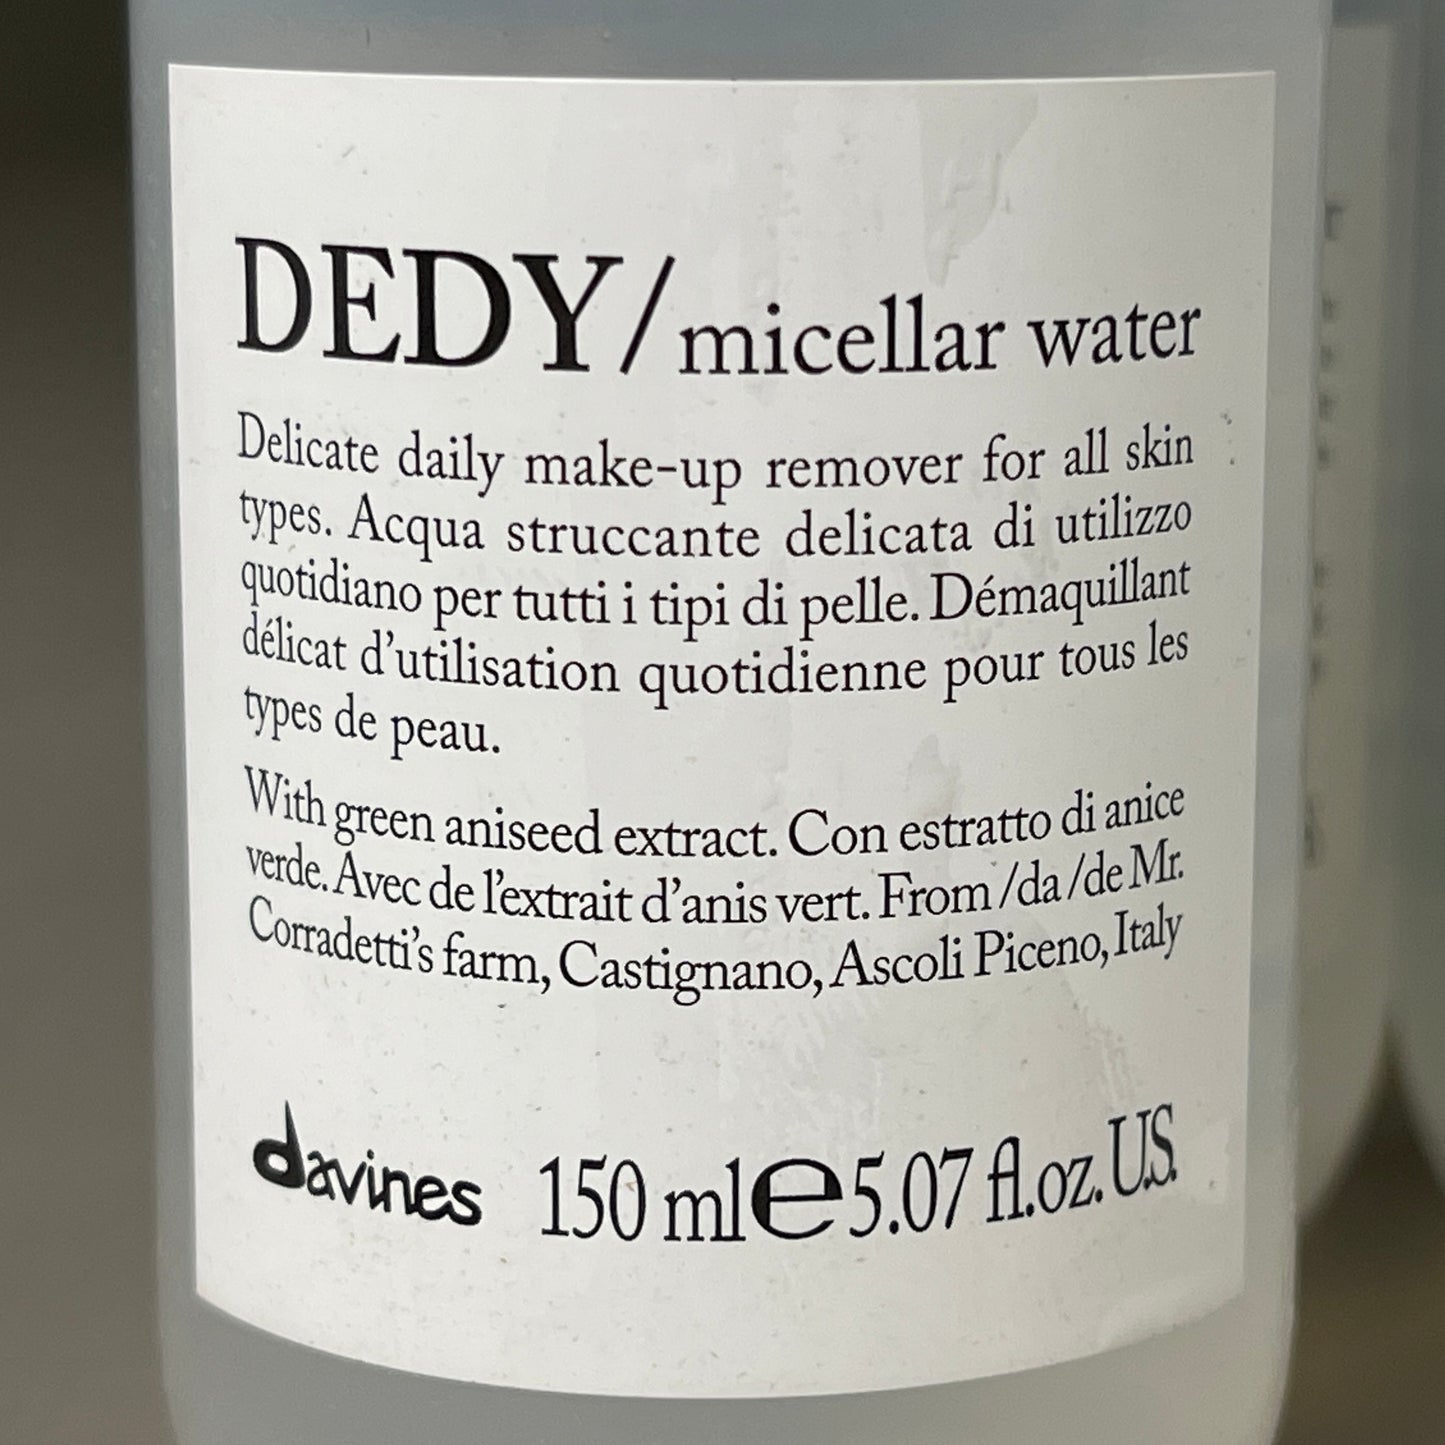 DAVINES 6 Pack Of Dedy Micellar Water -Rare 5.07 fl oz/150ml 75573 (New)